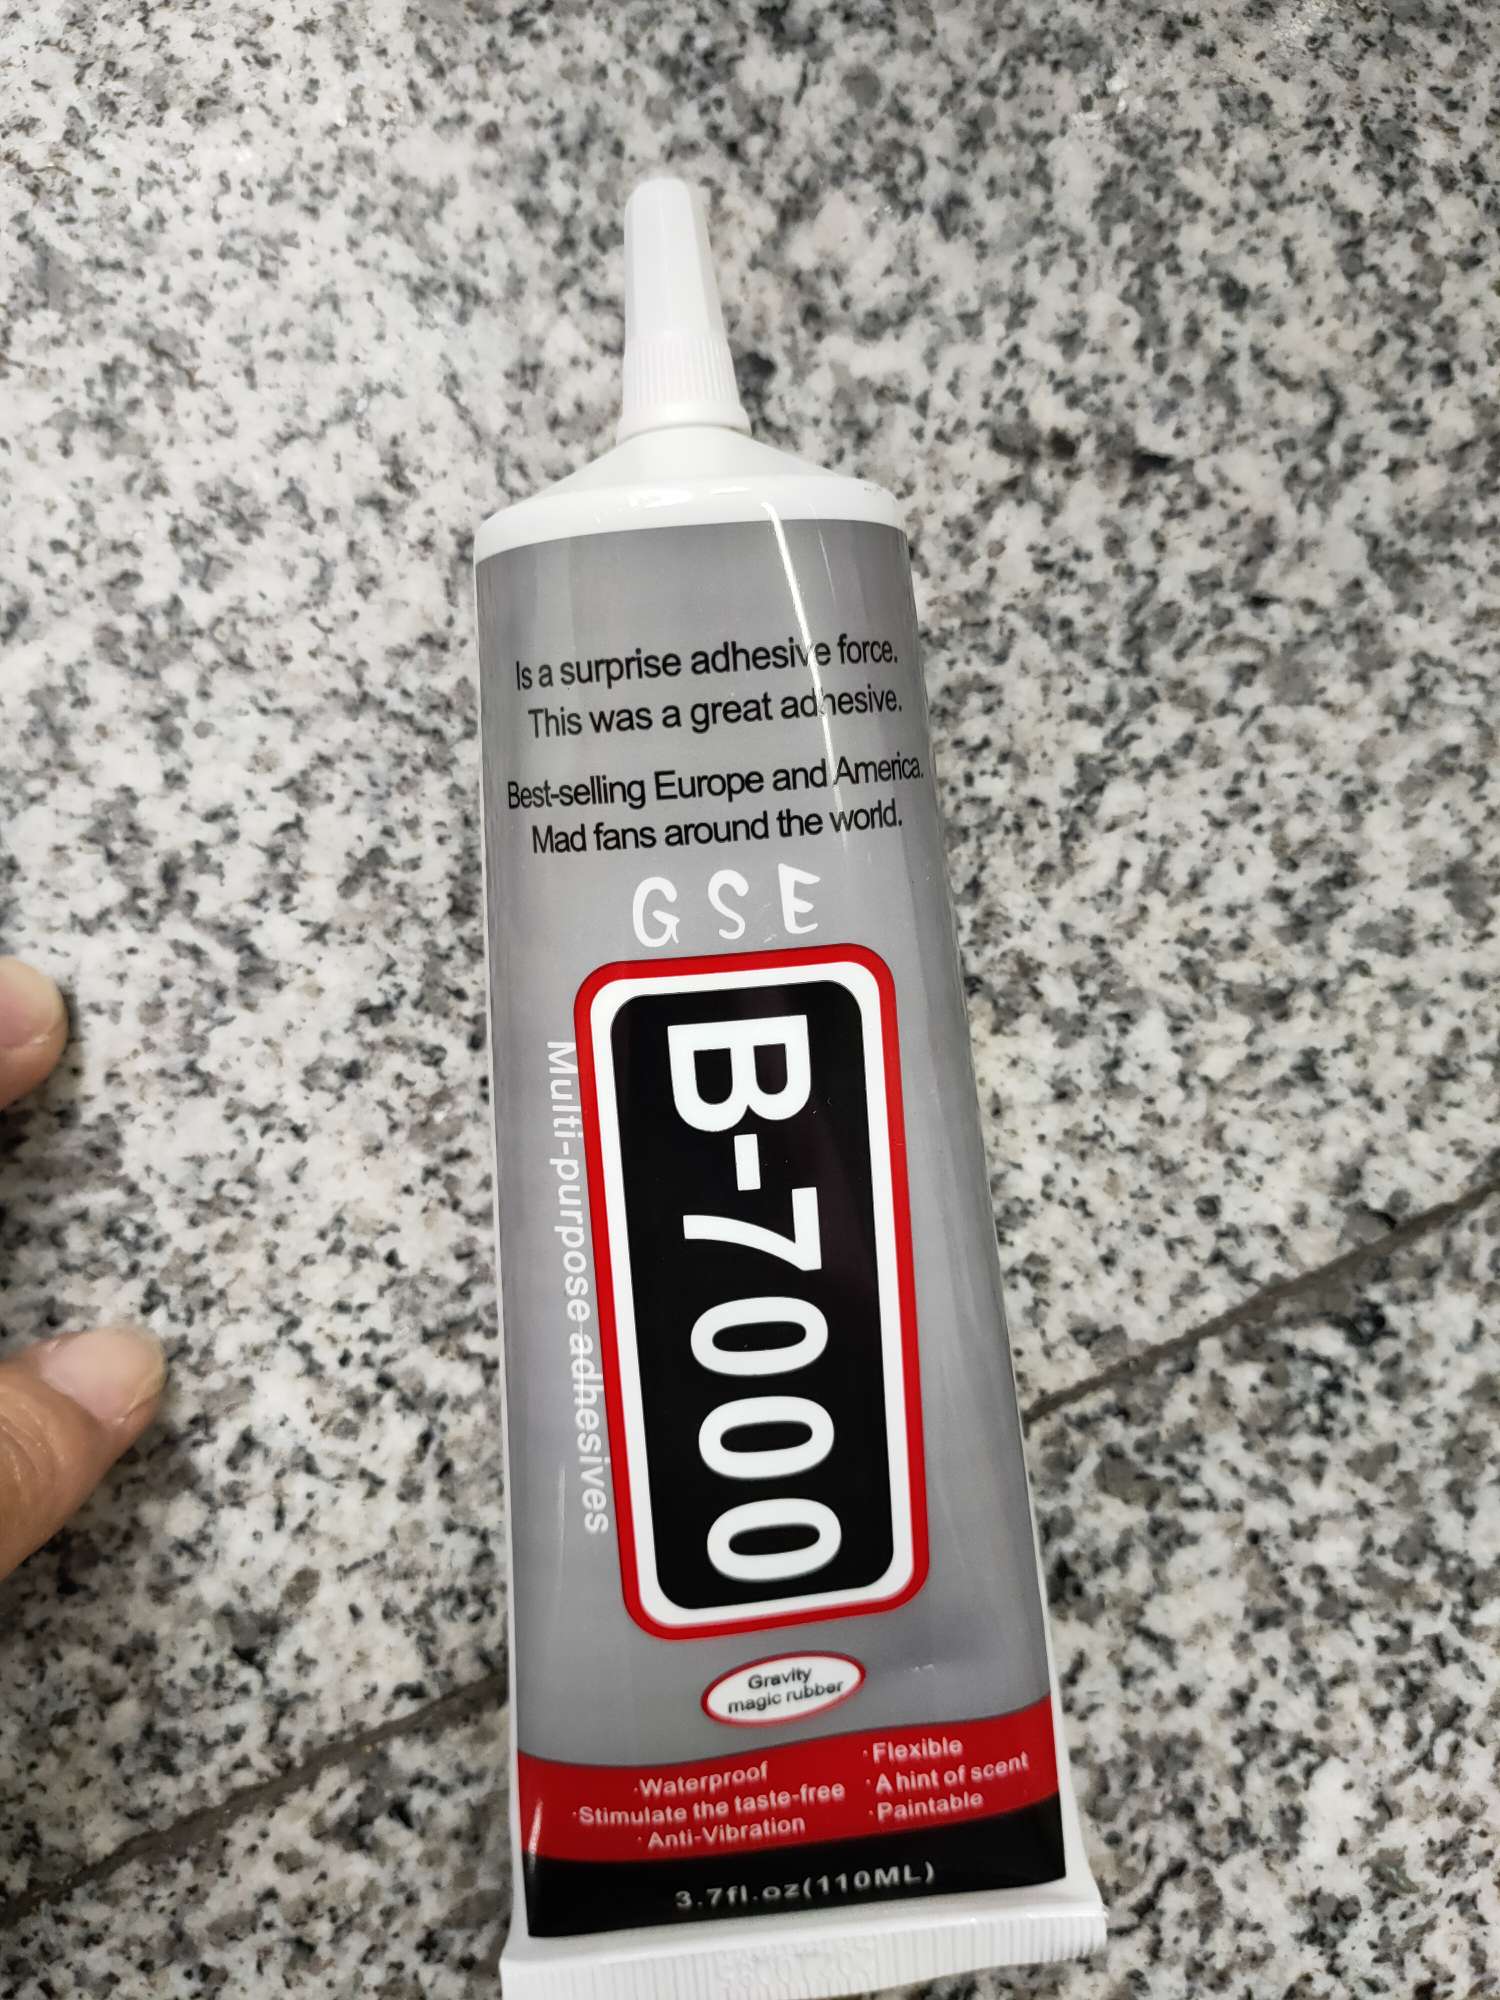 B7000胶水粘钻产品装12支